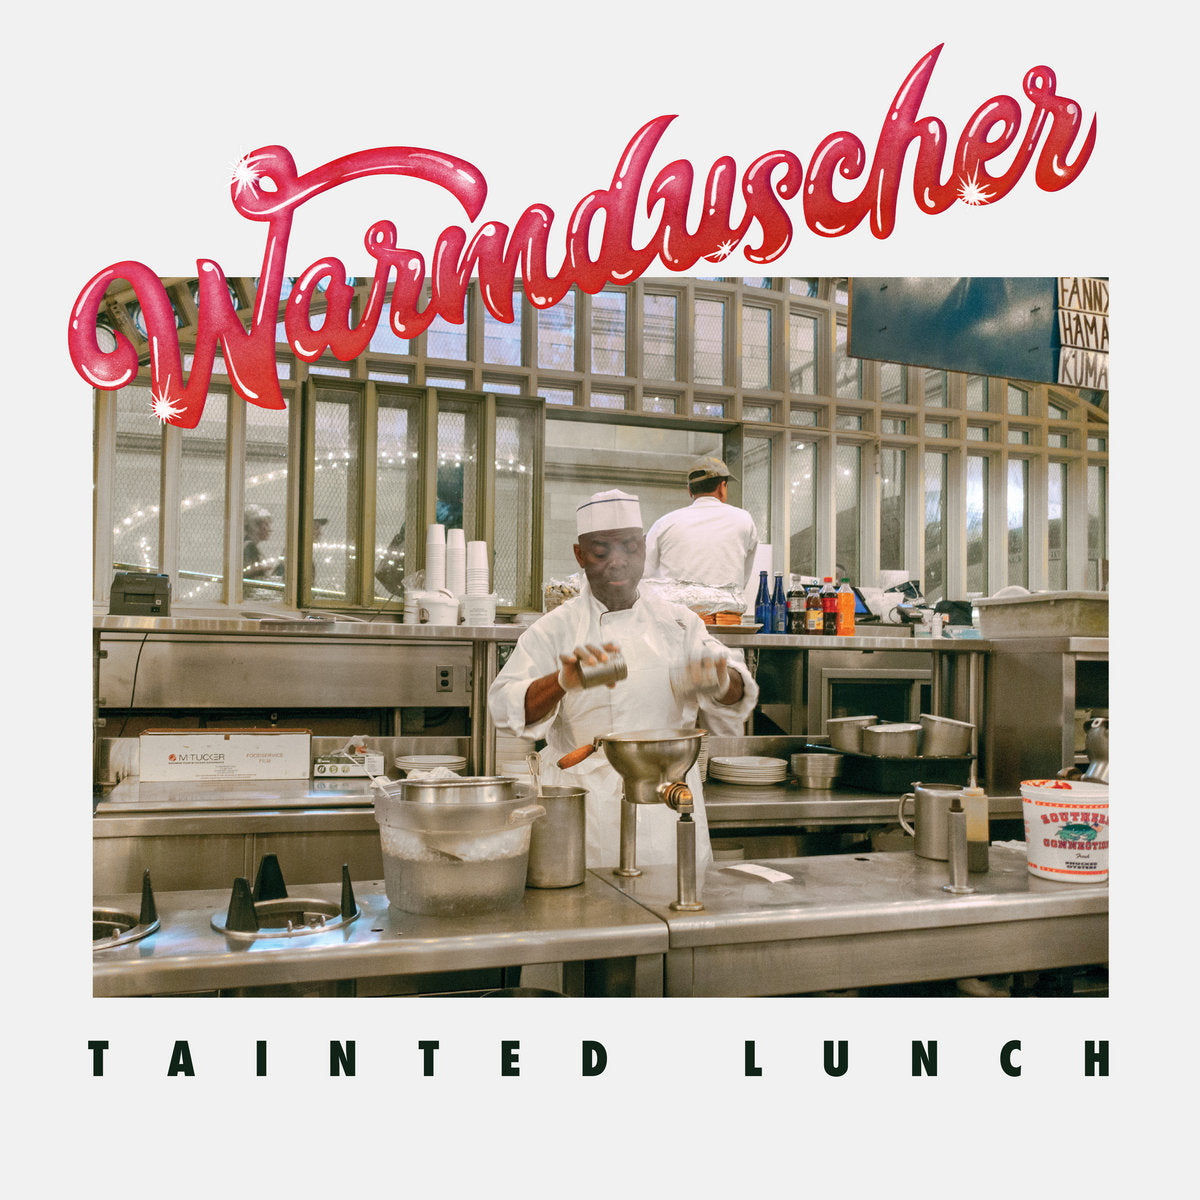 Warmduscher - Tainted Lunch CD